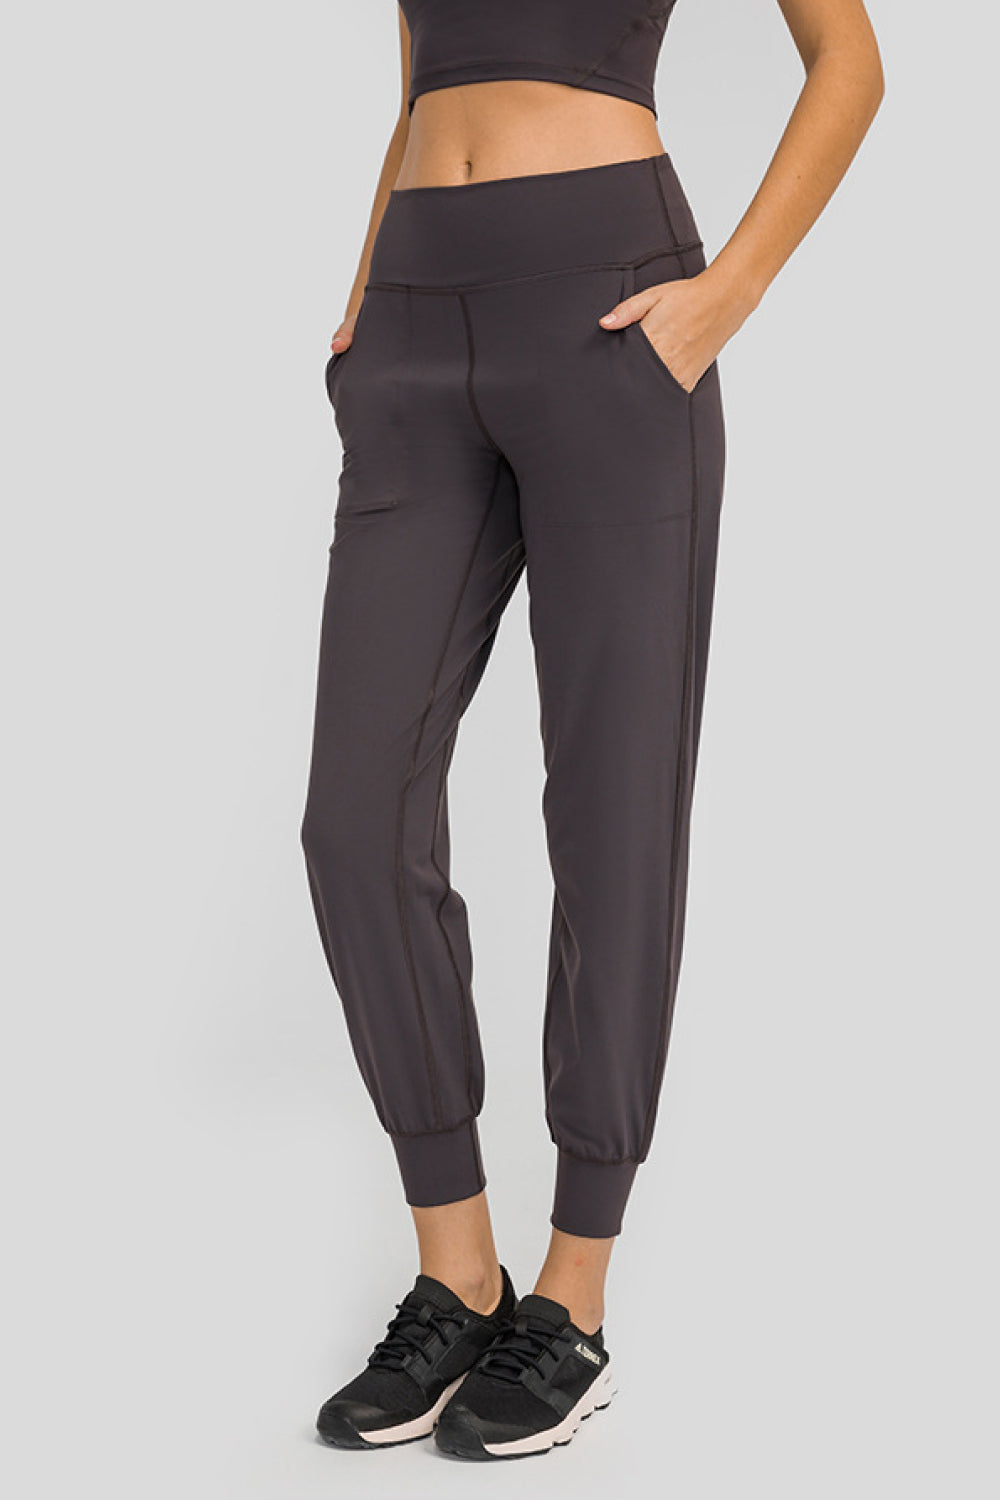 Women's Wide Waistband Slant Pocket Pants Size 4-12